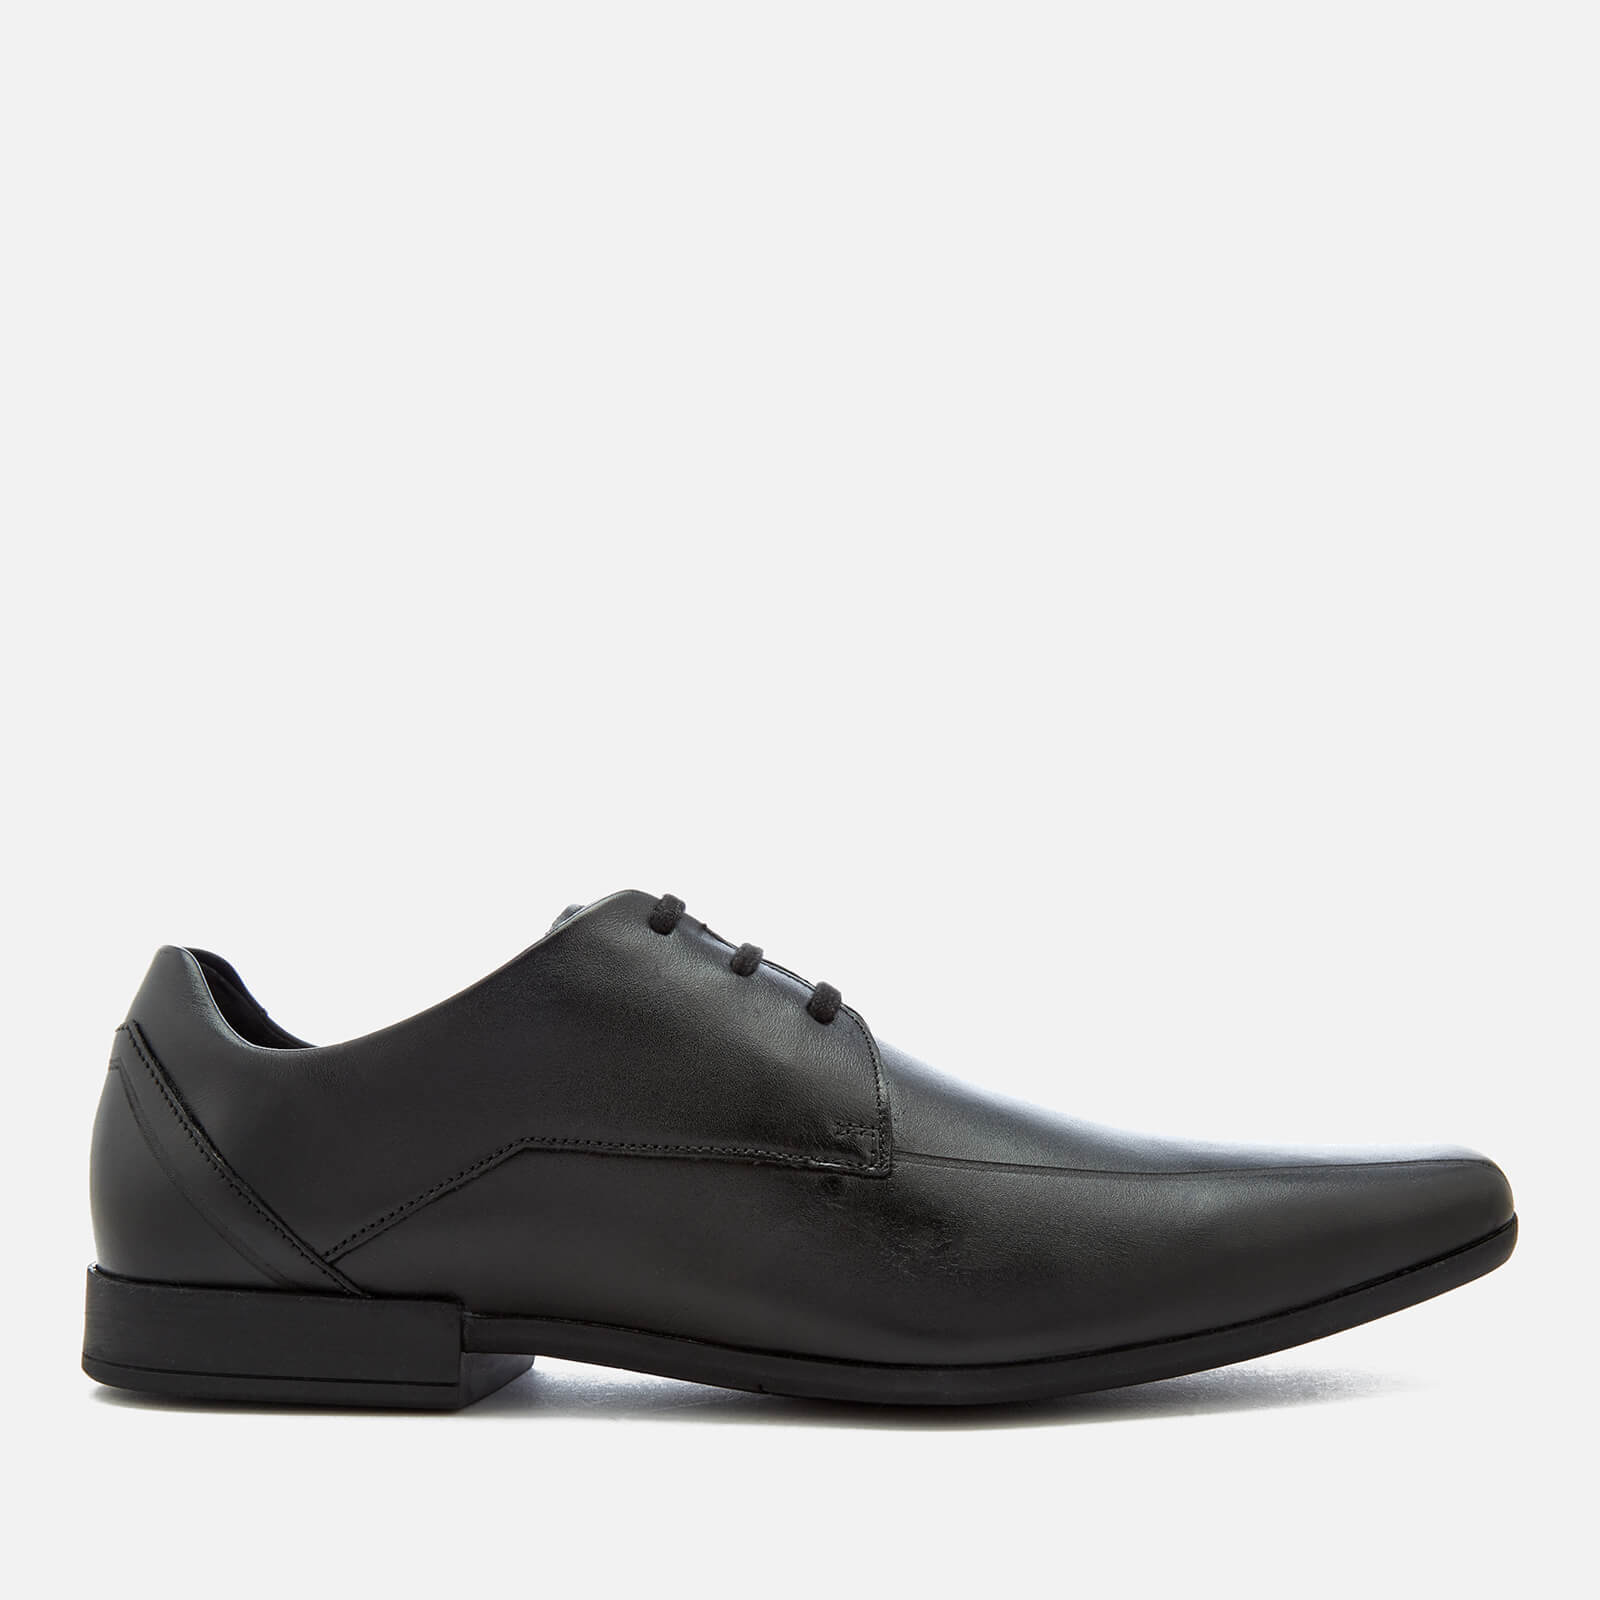 Clarks Men's Glement Over Leather Derby Shoes - Black - UK 11